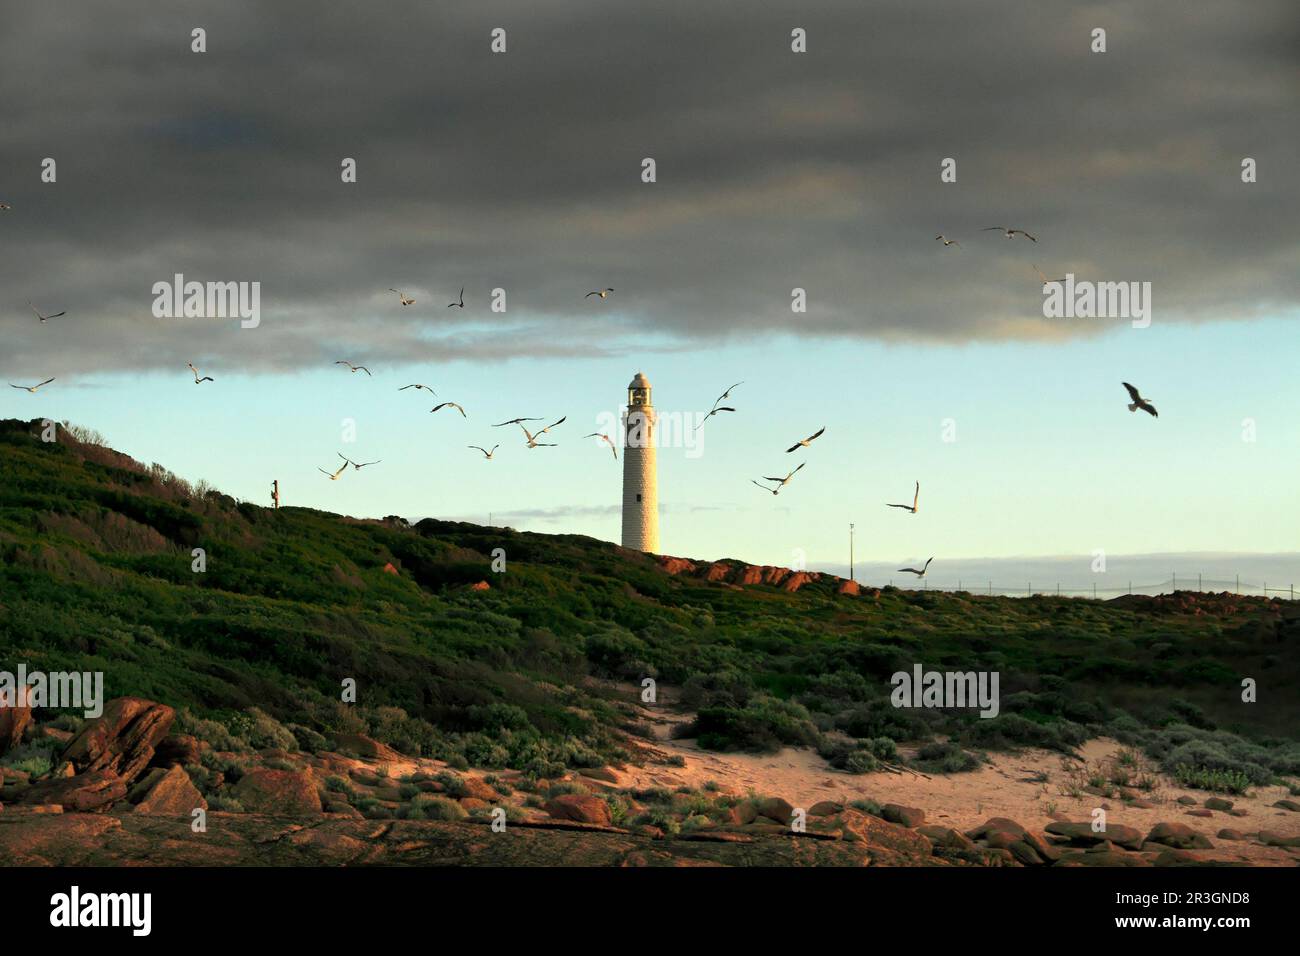 Seagulls flying near the Cape Leeuwin Lighthouse, Augusta, Southwest Australia Stock Photo